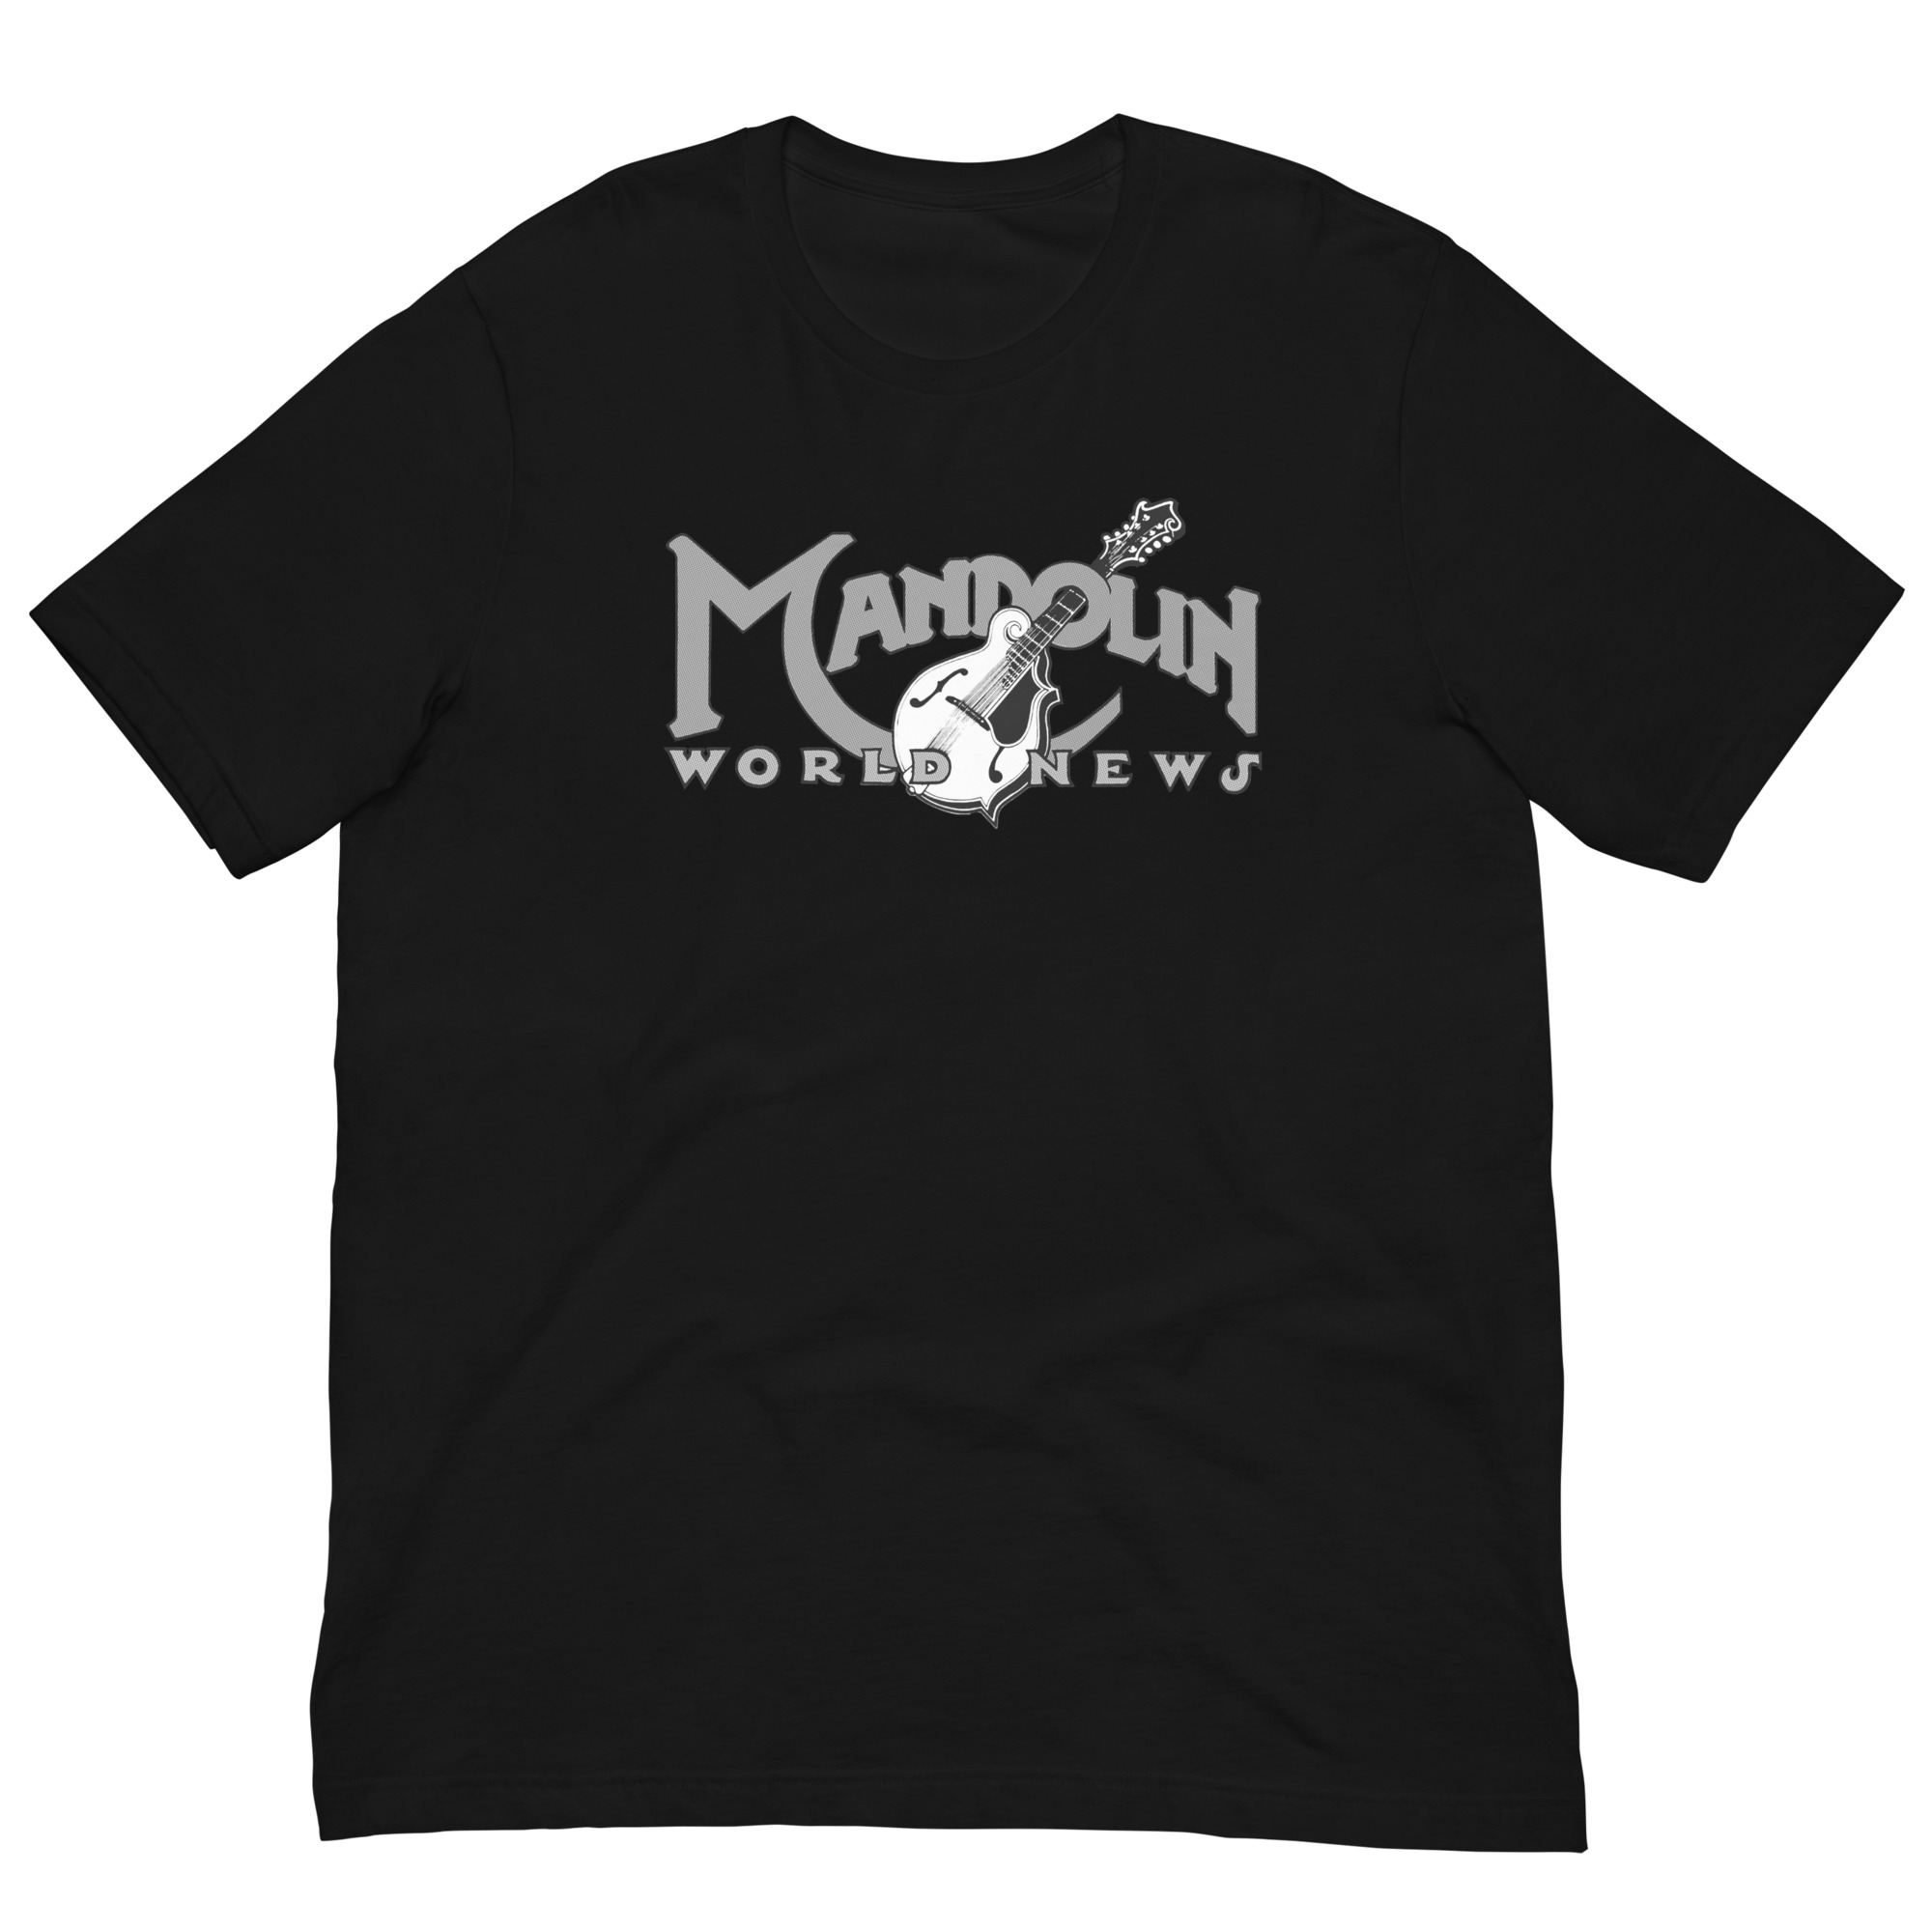 Mandolin World News T-Shirts